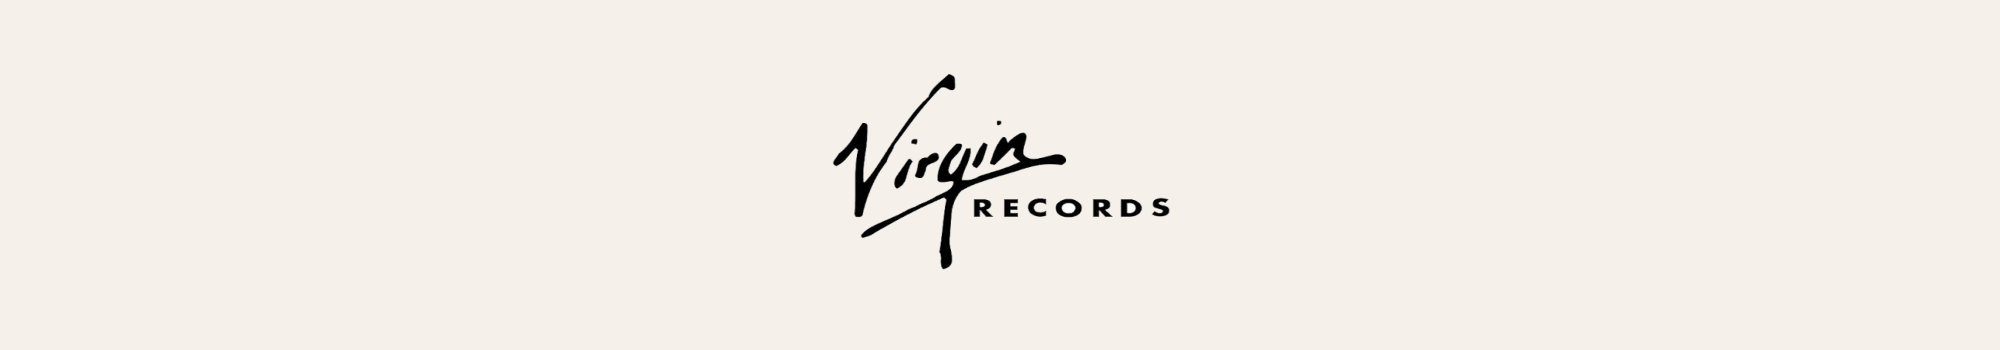 Virgin Records logotyp